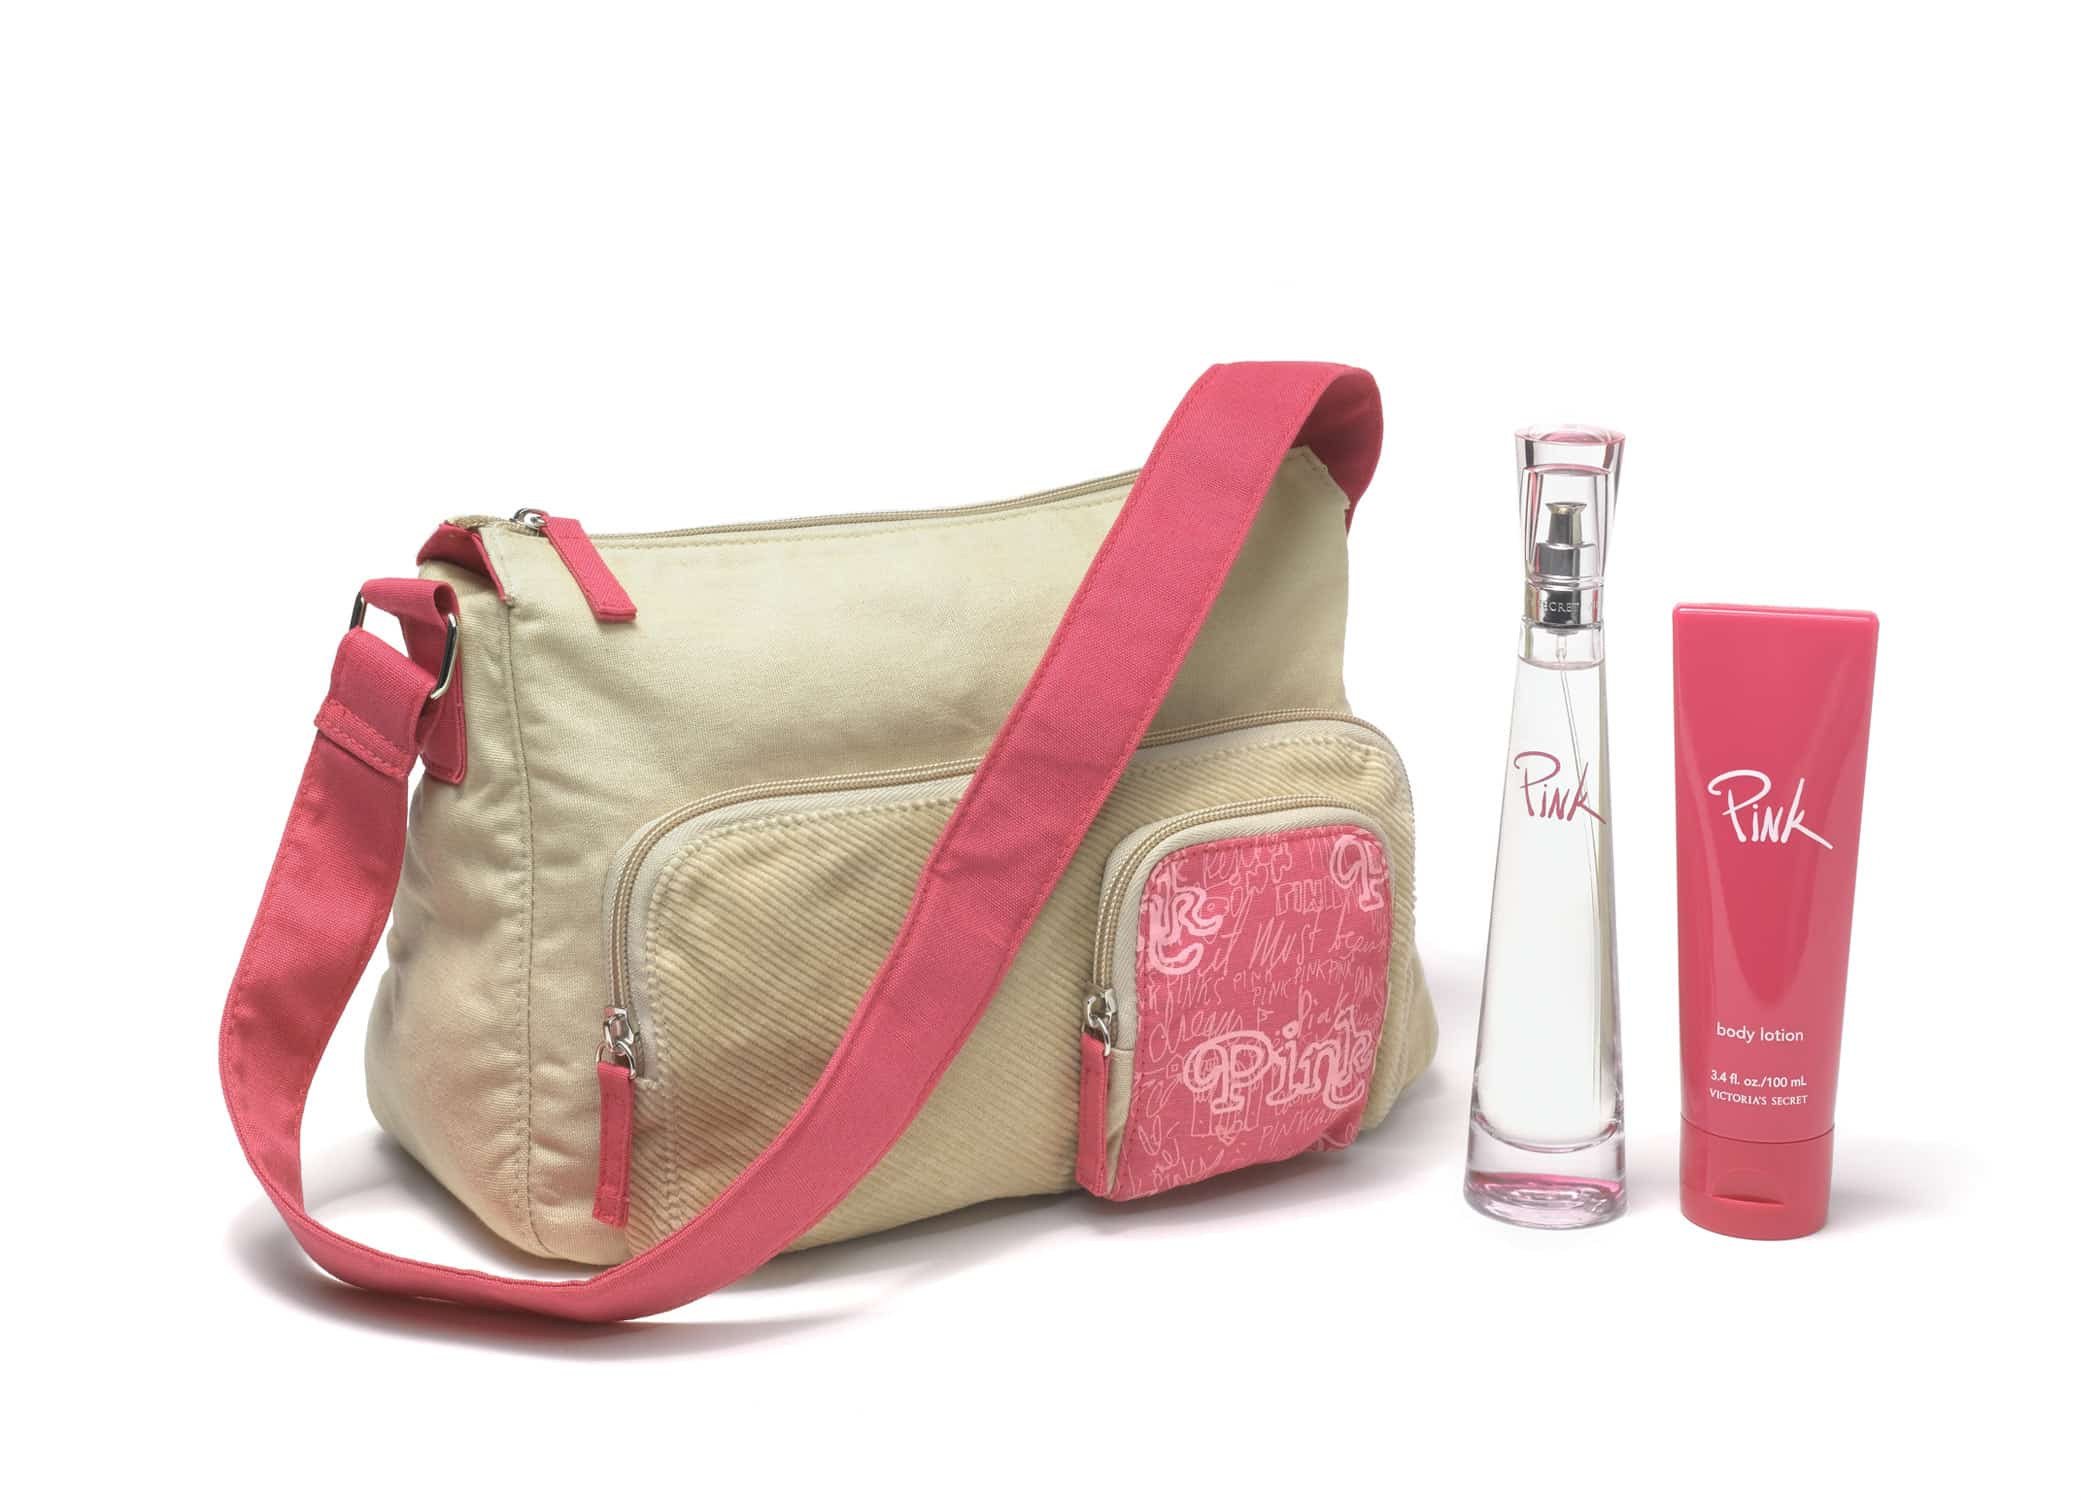 Perfume packaging design for Victoria's Secret Pink showcasing signature pink fragrance bottles with beige and pink handbag.